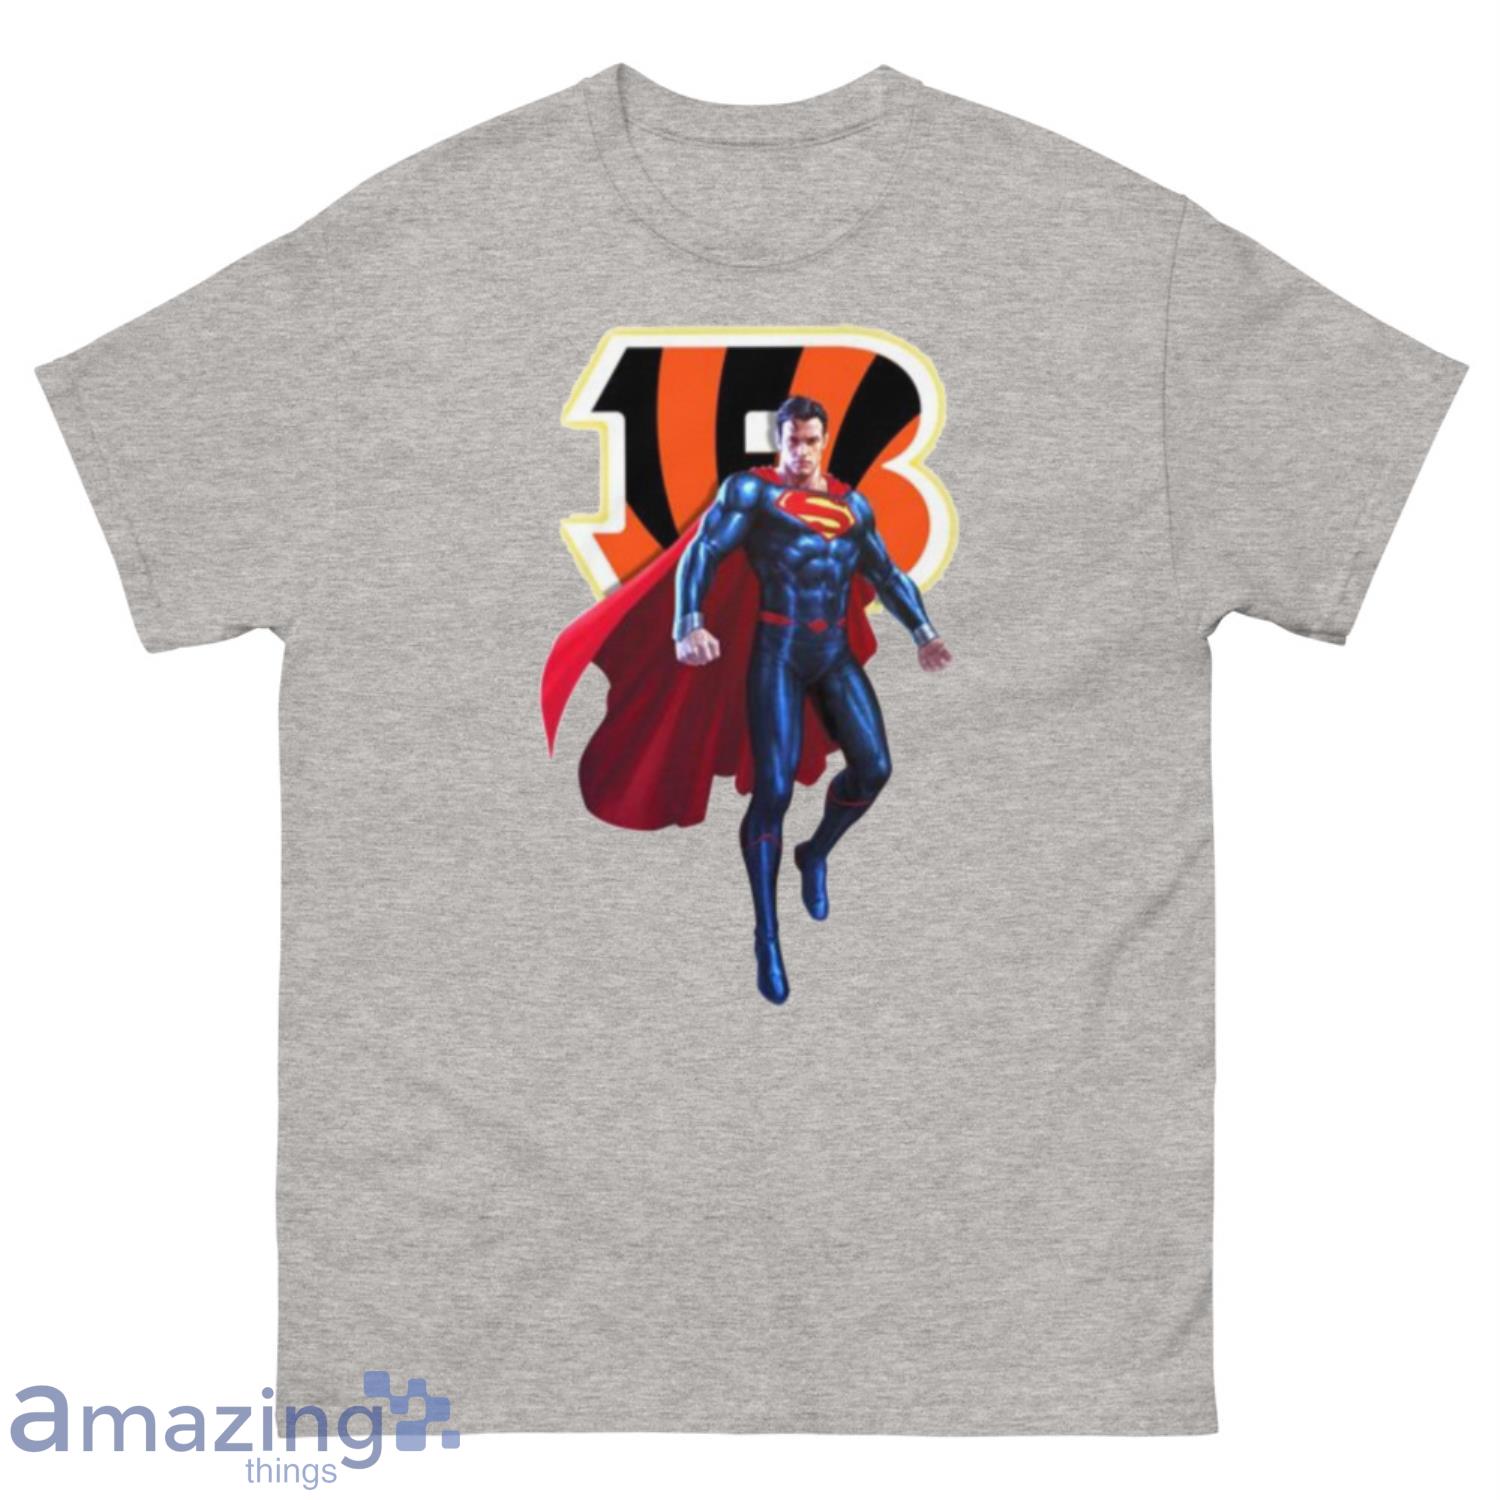 NFL Superman Cincinnati Bengals T-Shirt Gift For Fans Product Photo 1